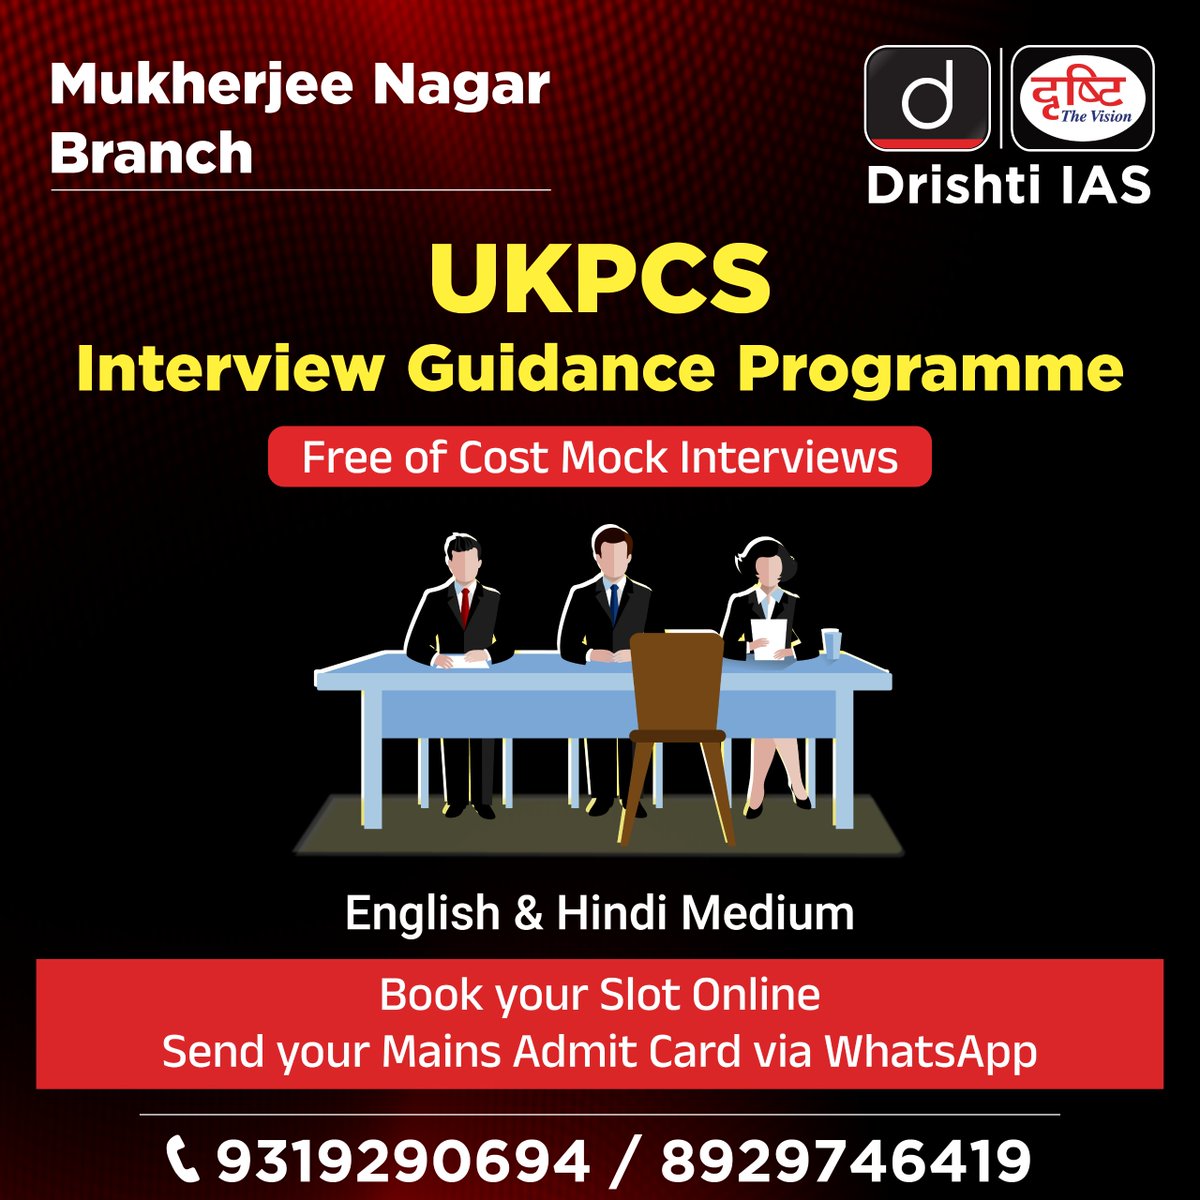 Ready to ace your #UKPCSInterview? Enroll in the #InterviewGuidanceProgram at our #MukherjeeNagar branch. Reserve your spot online for free now: drishti.xyz/UKPCS-IGP #Delhi #StatePCS #UKPCSPrelims #UKPCSMains #UKPCS #Uttarakhand #UPSC #DrishtiIAS #DrishtiIASEnglish